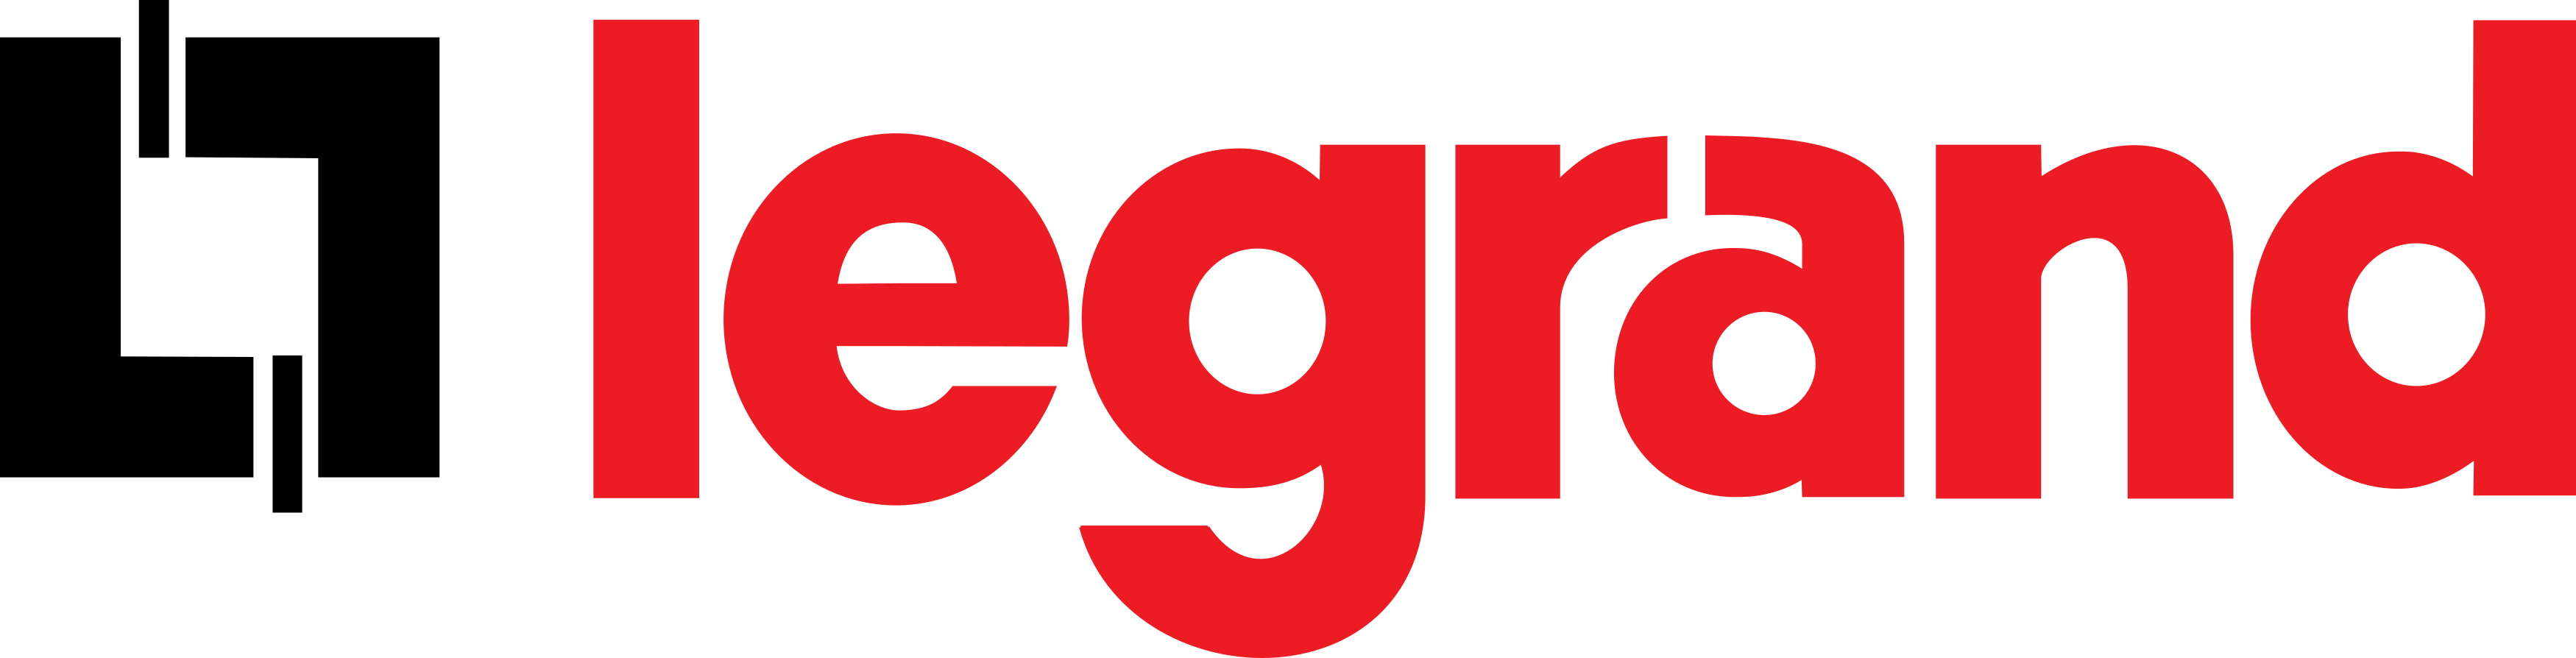 legrand-logo-1